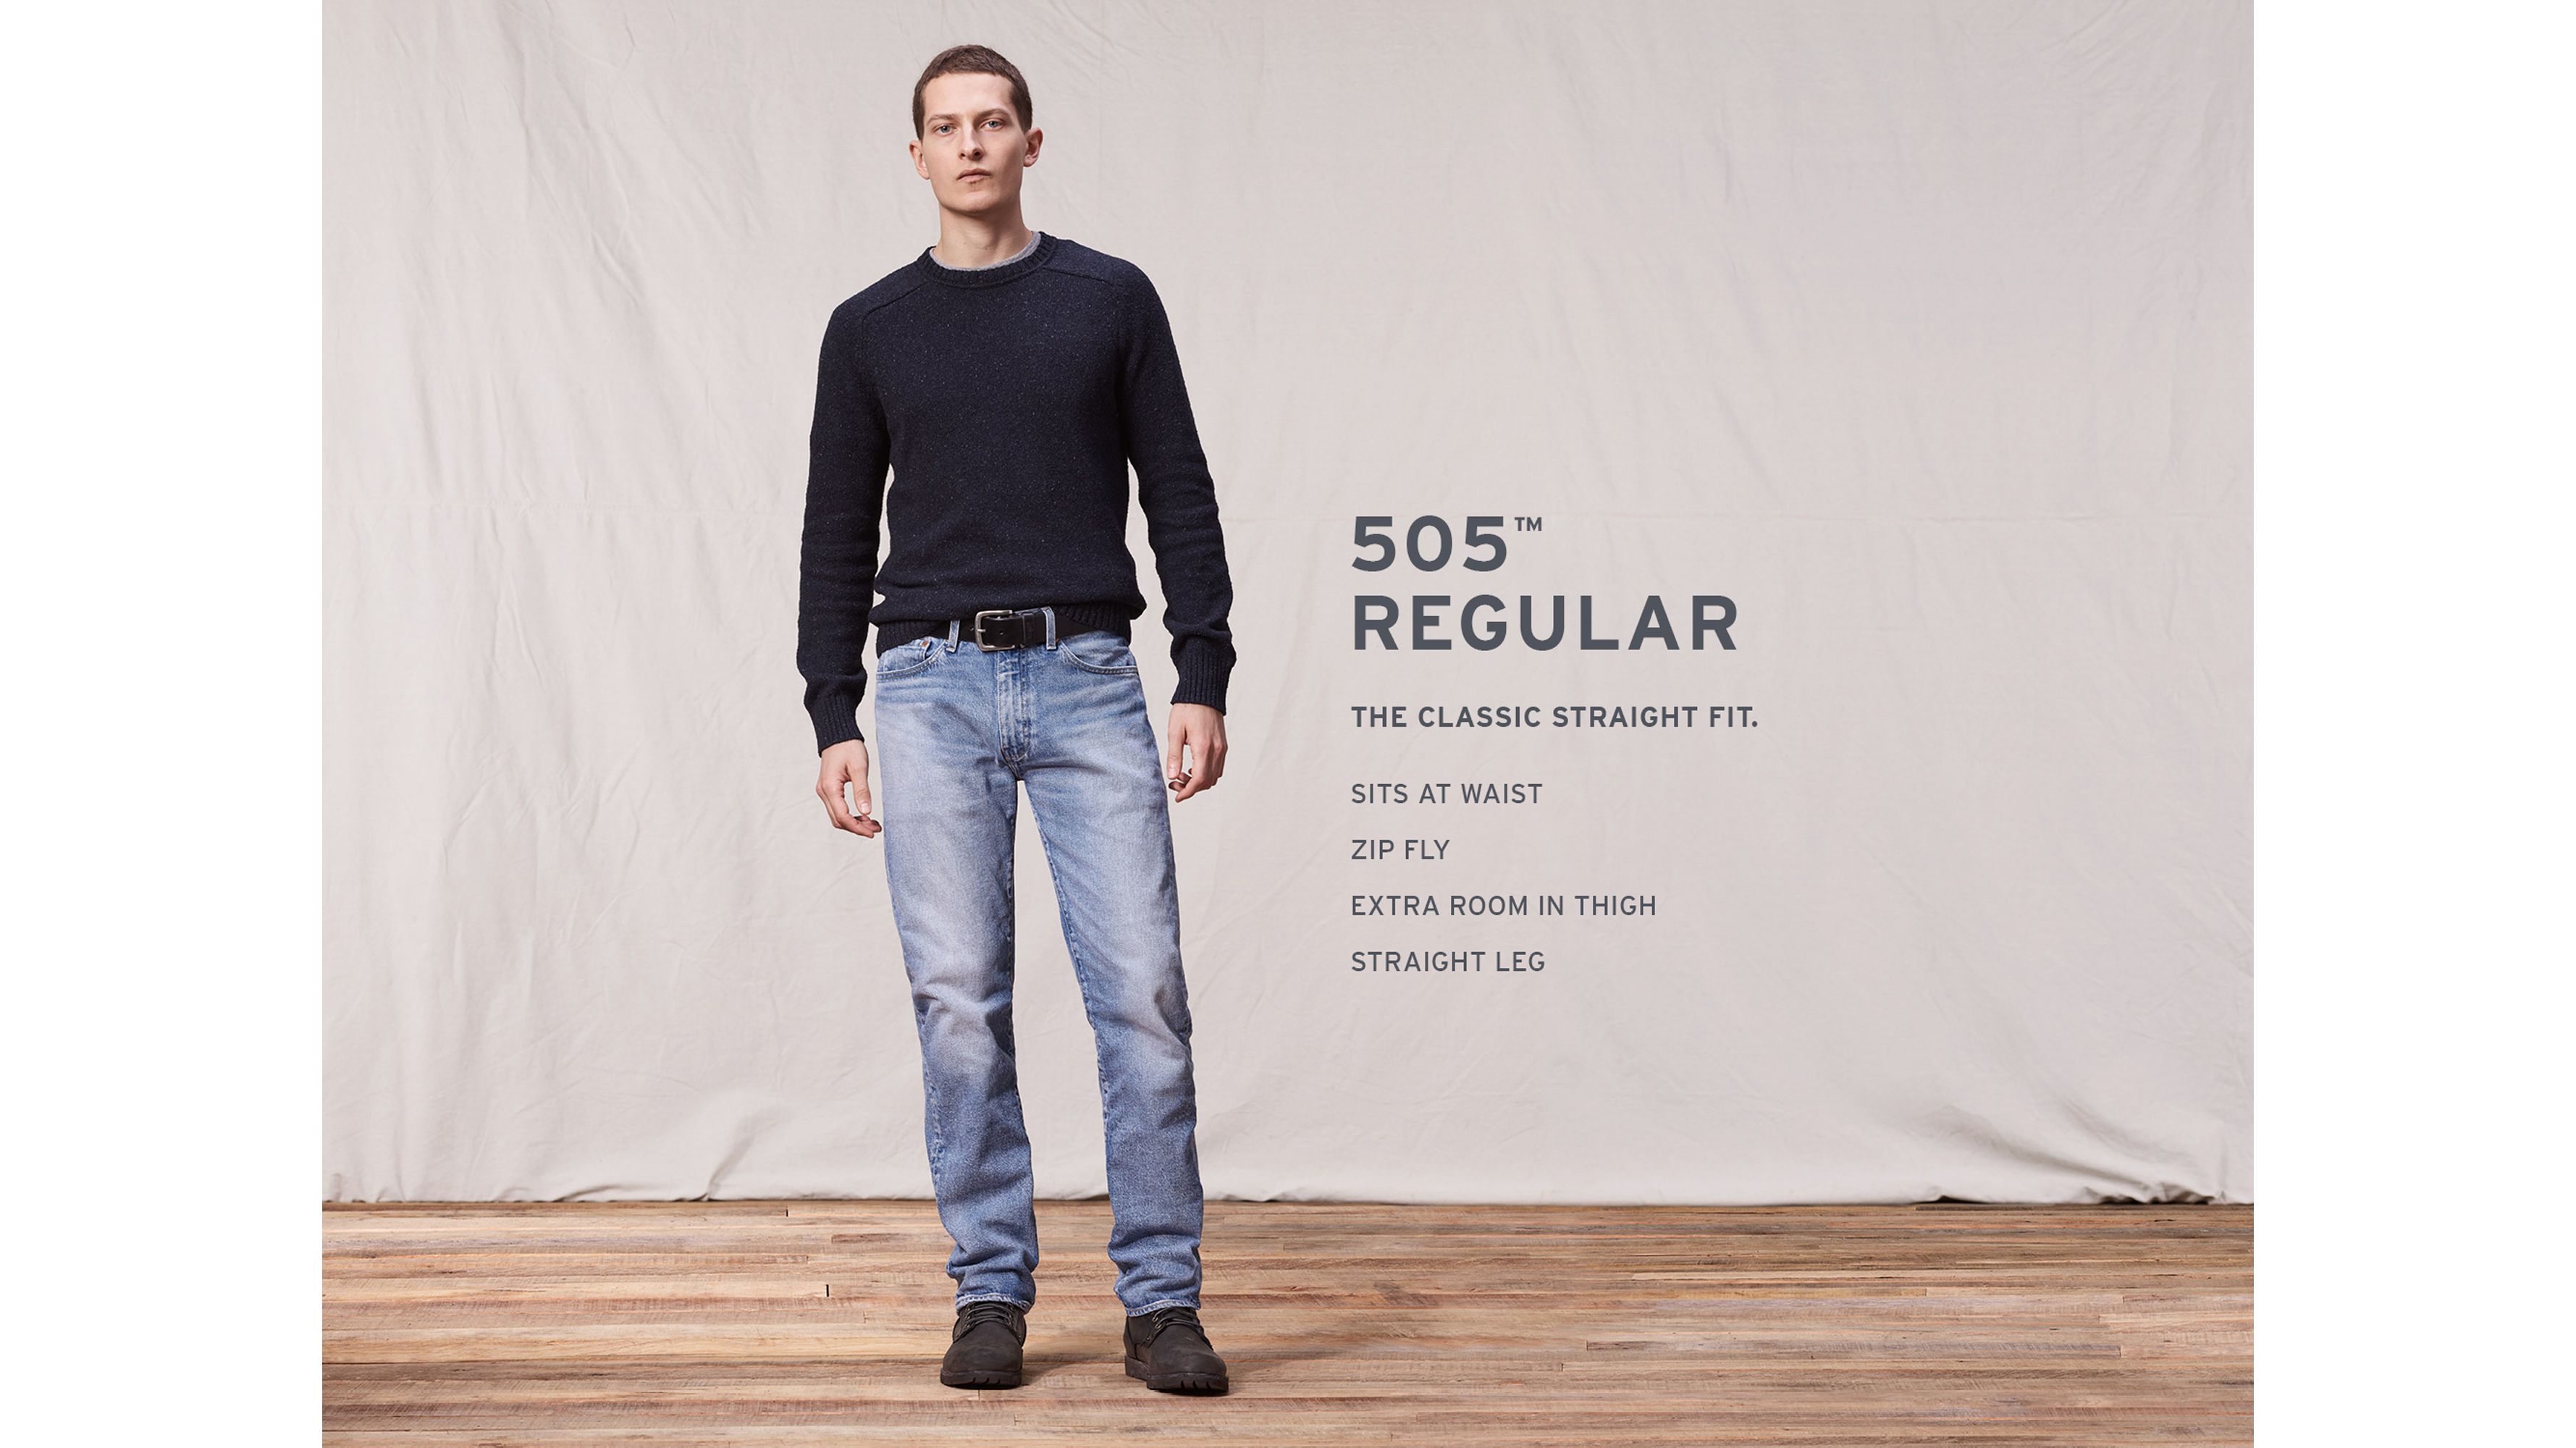 505 regular fit levi jeans